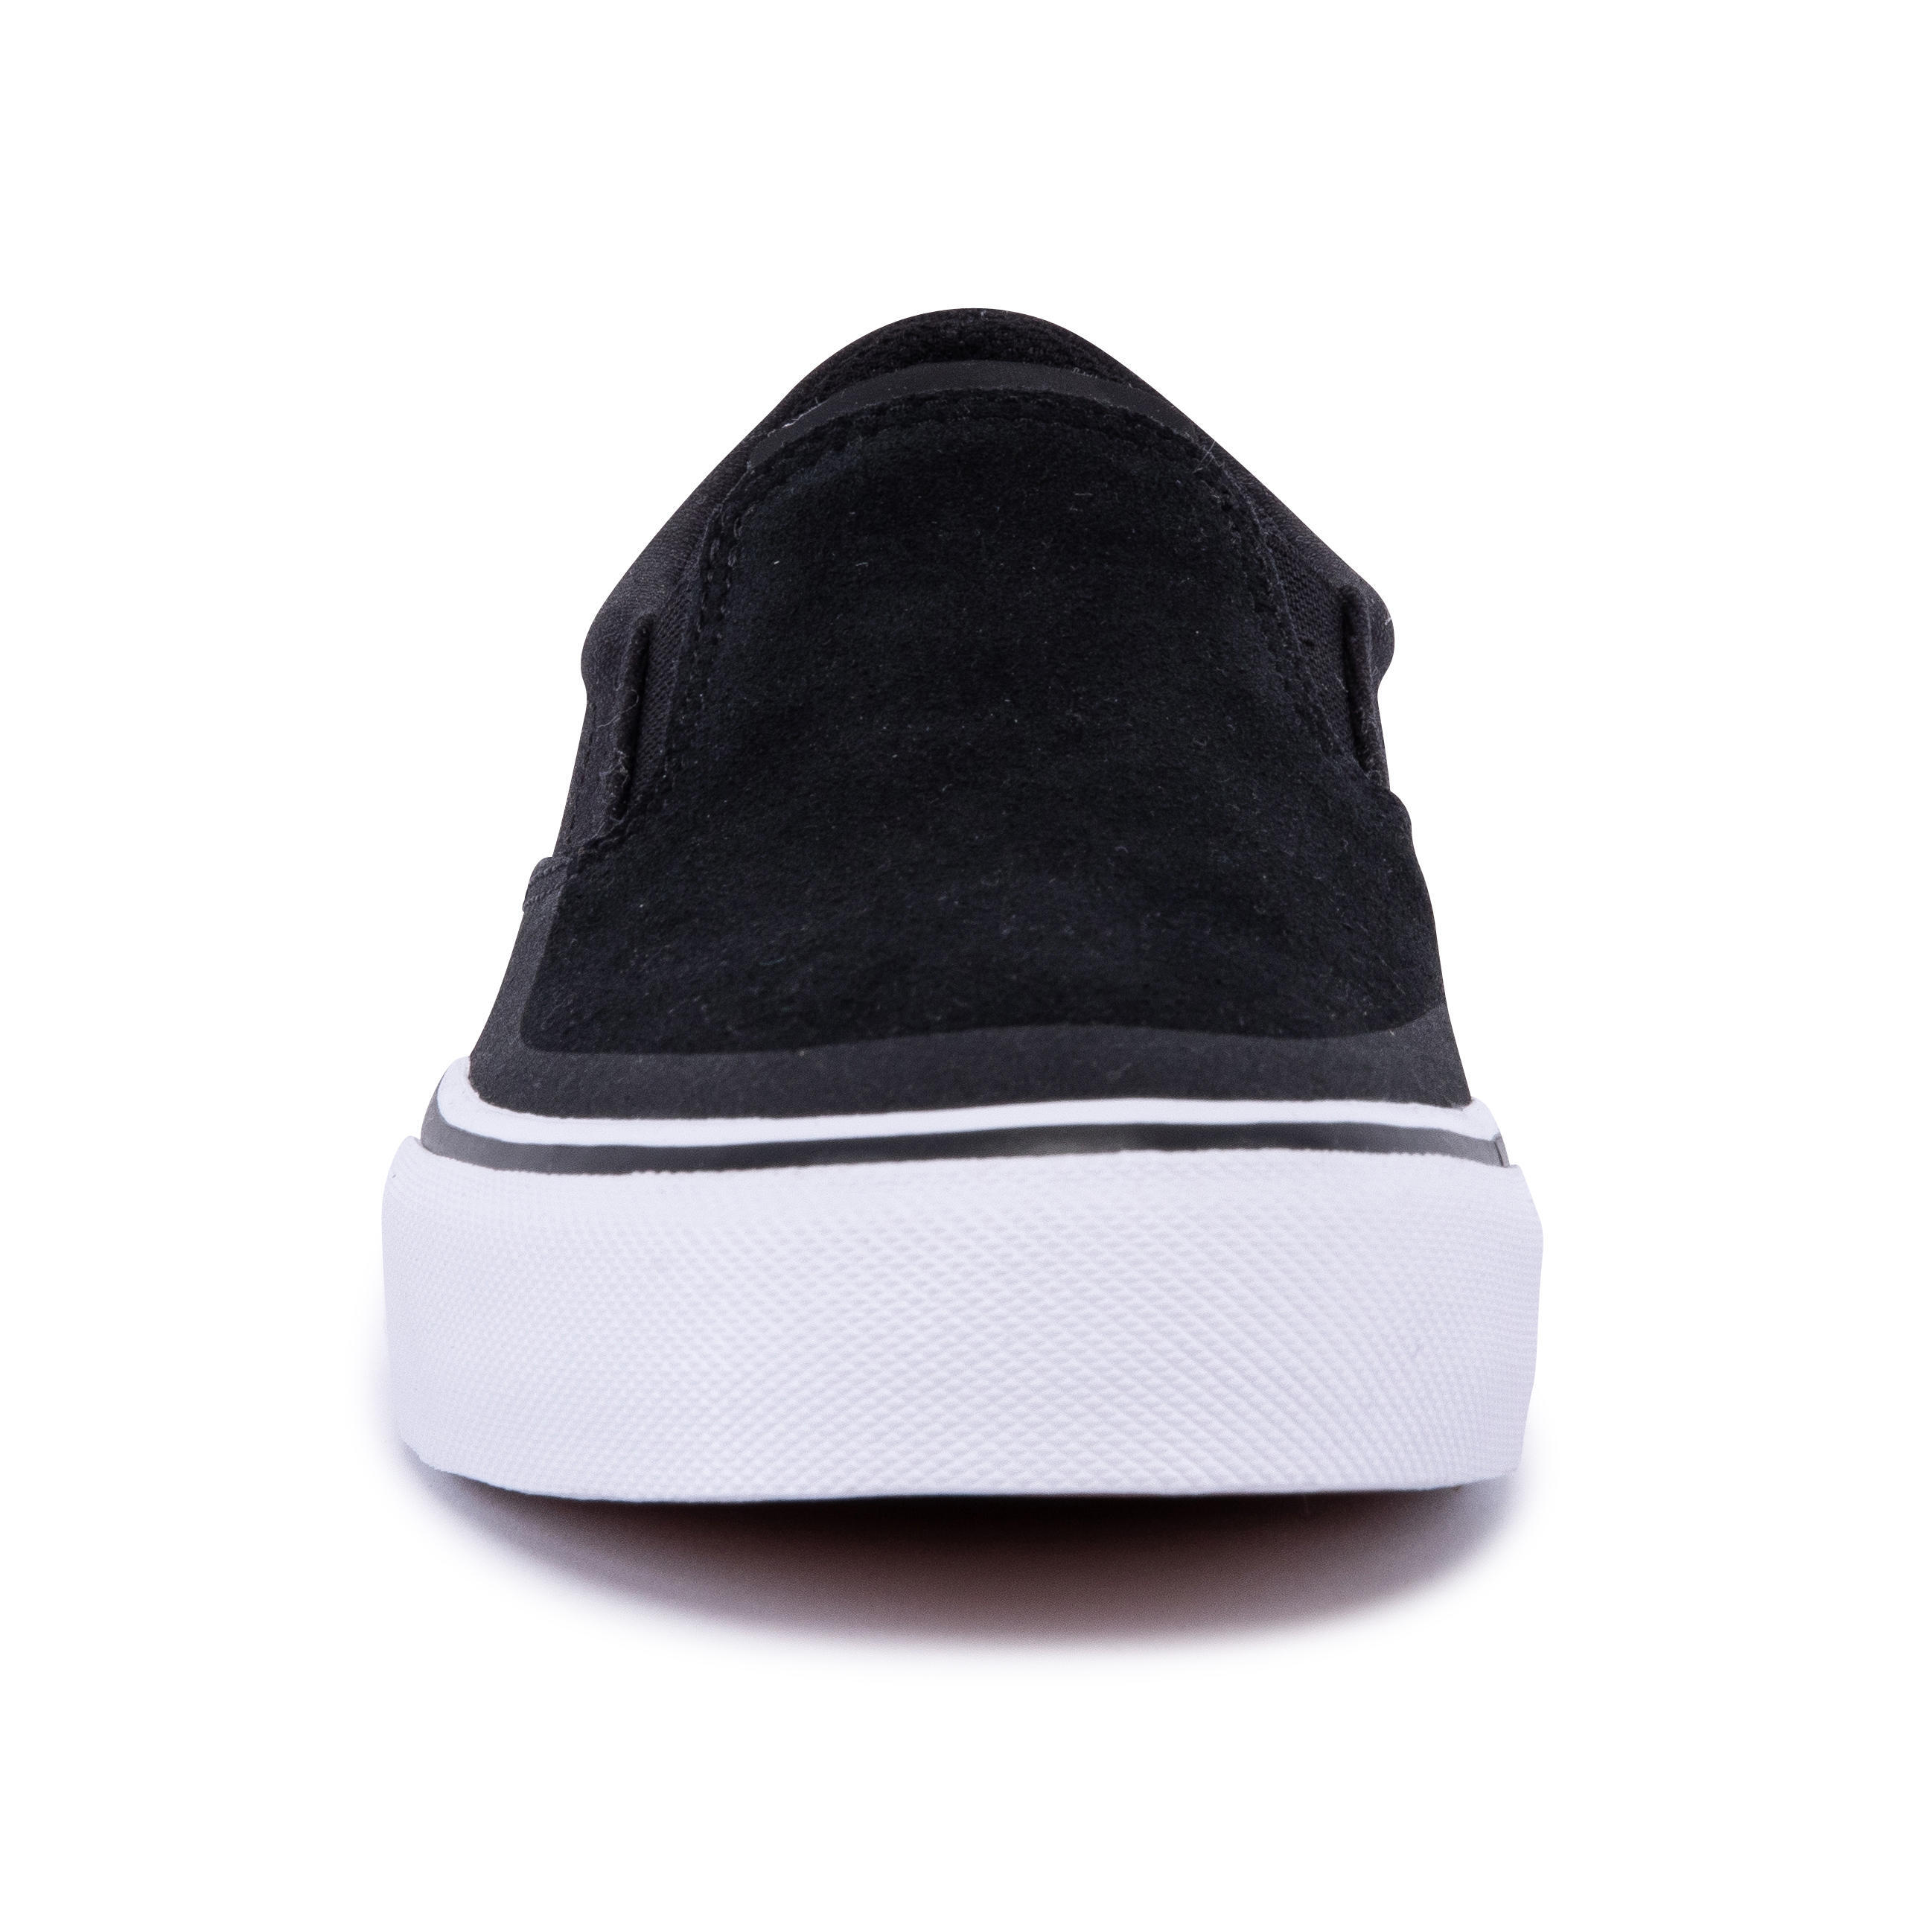 Vulca 500 Adult Low-Top Slip-On Skate Shoes - Black/White 3/12